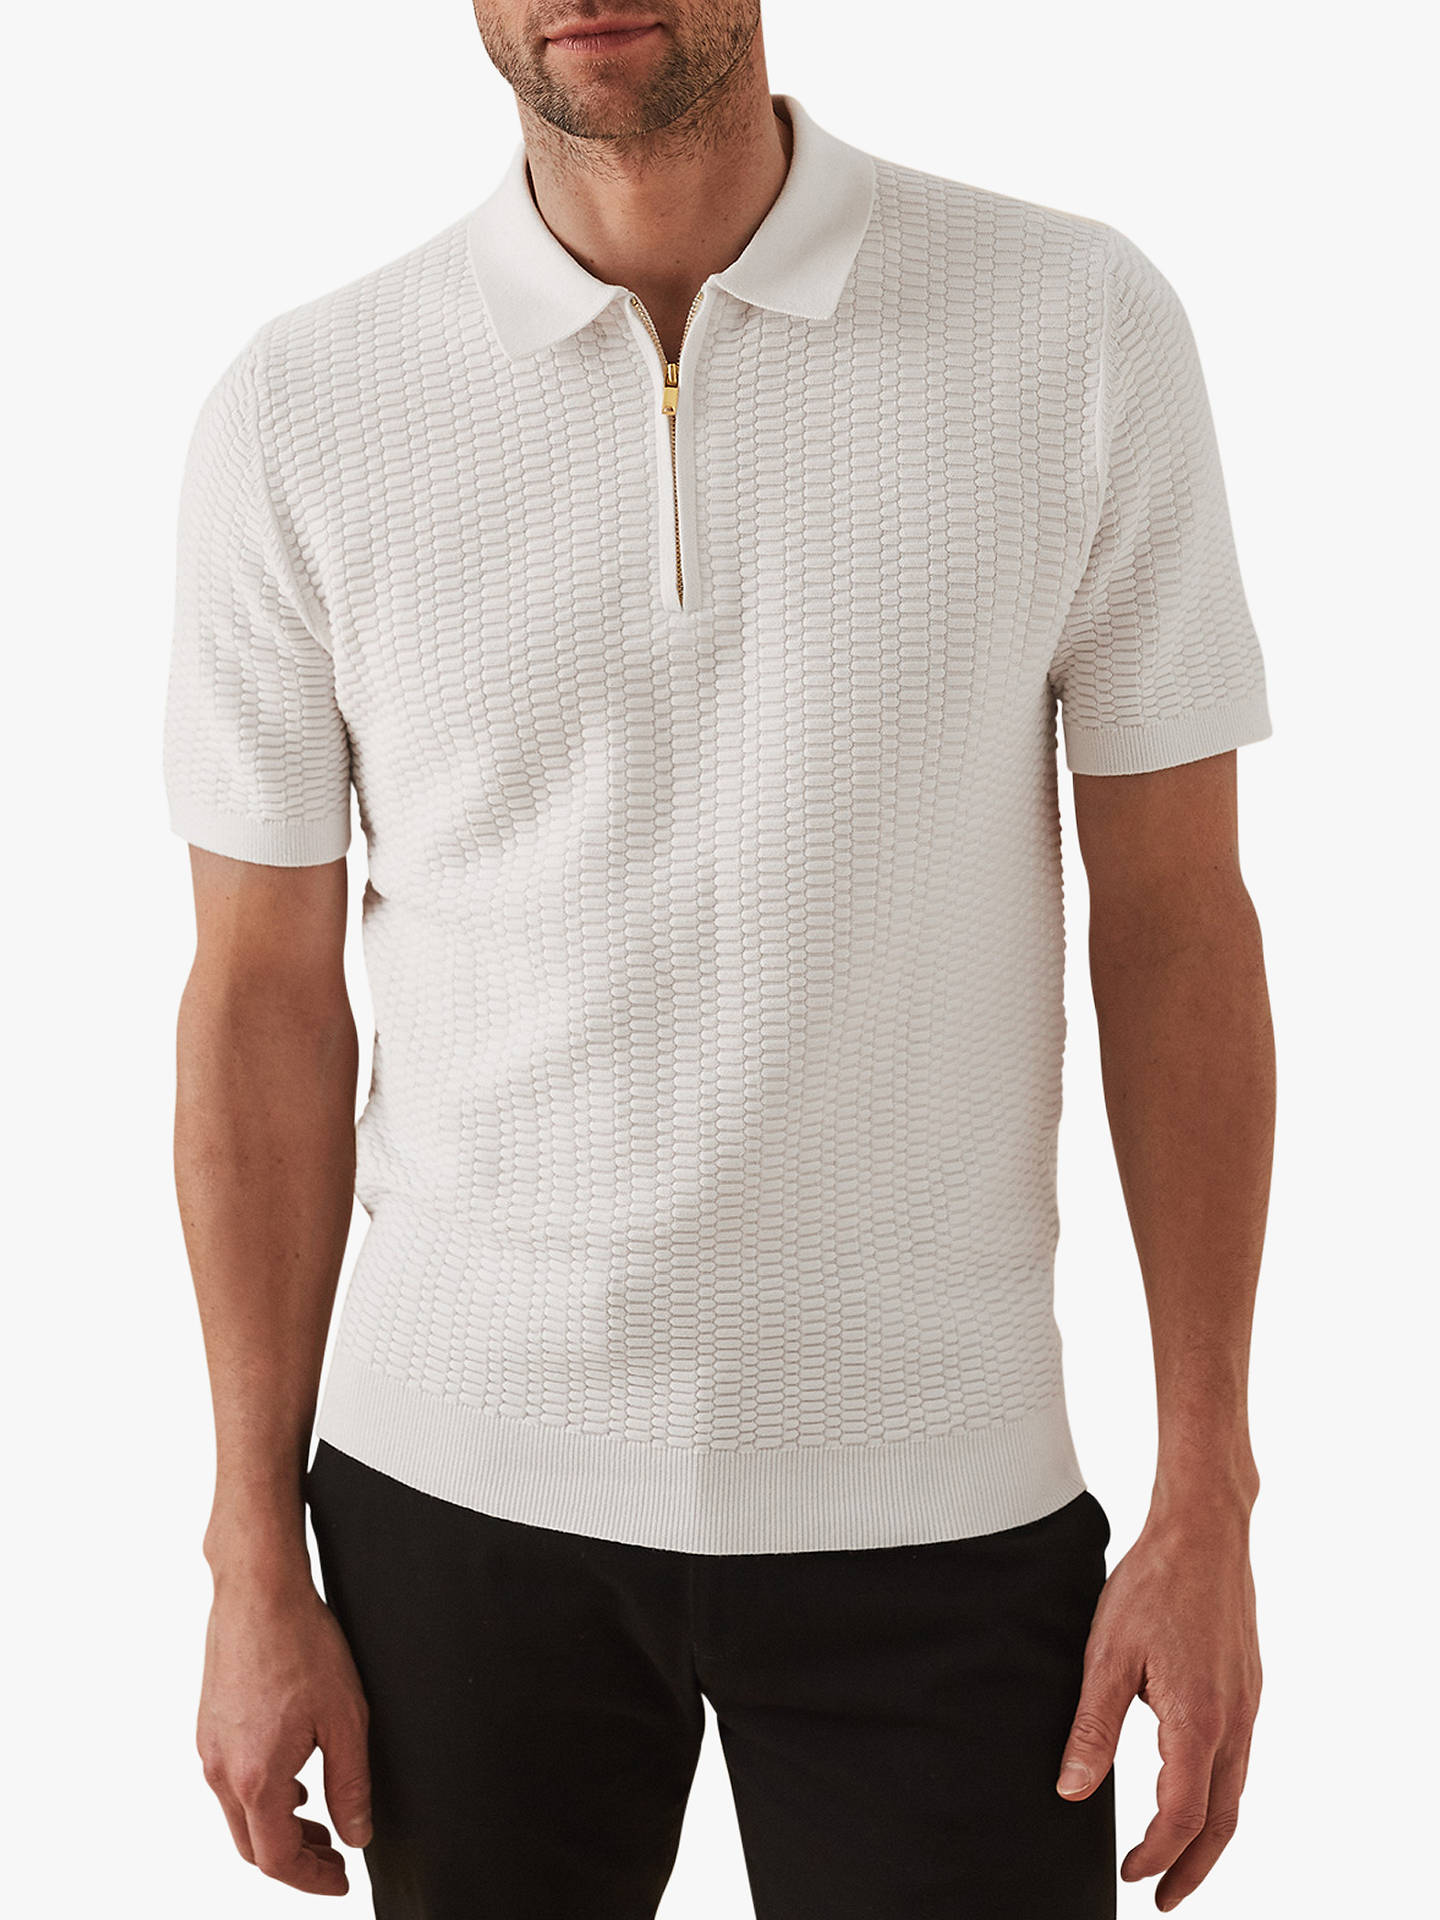 Reiss Freddy Half Zip Textured Polo Shirt at John Lewis & Partners